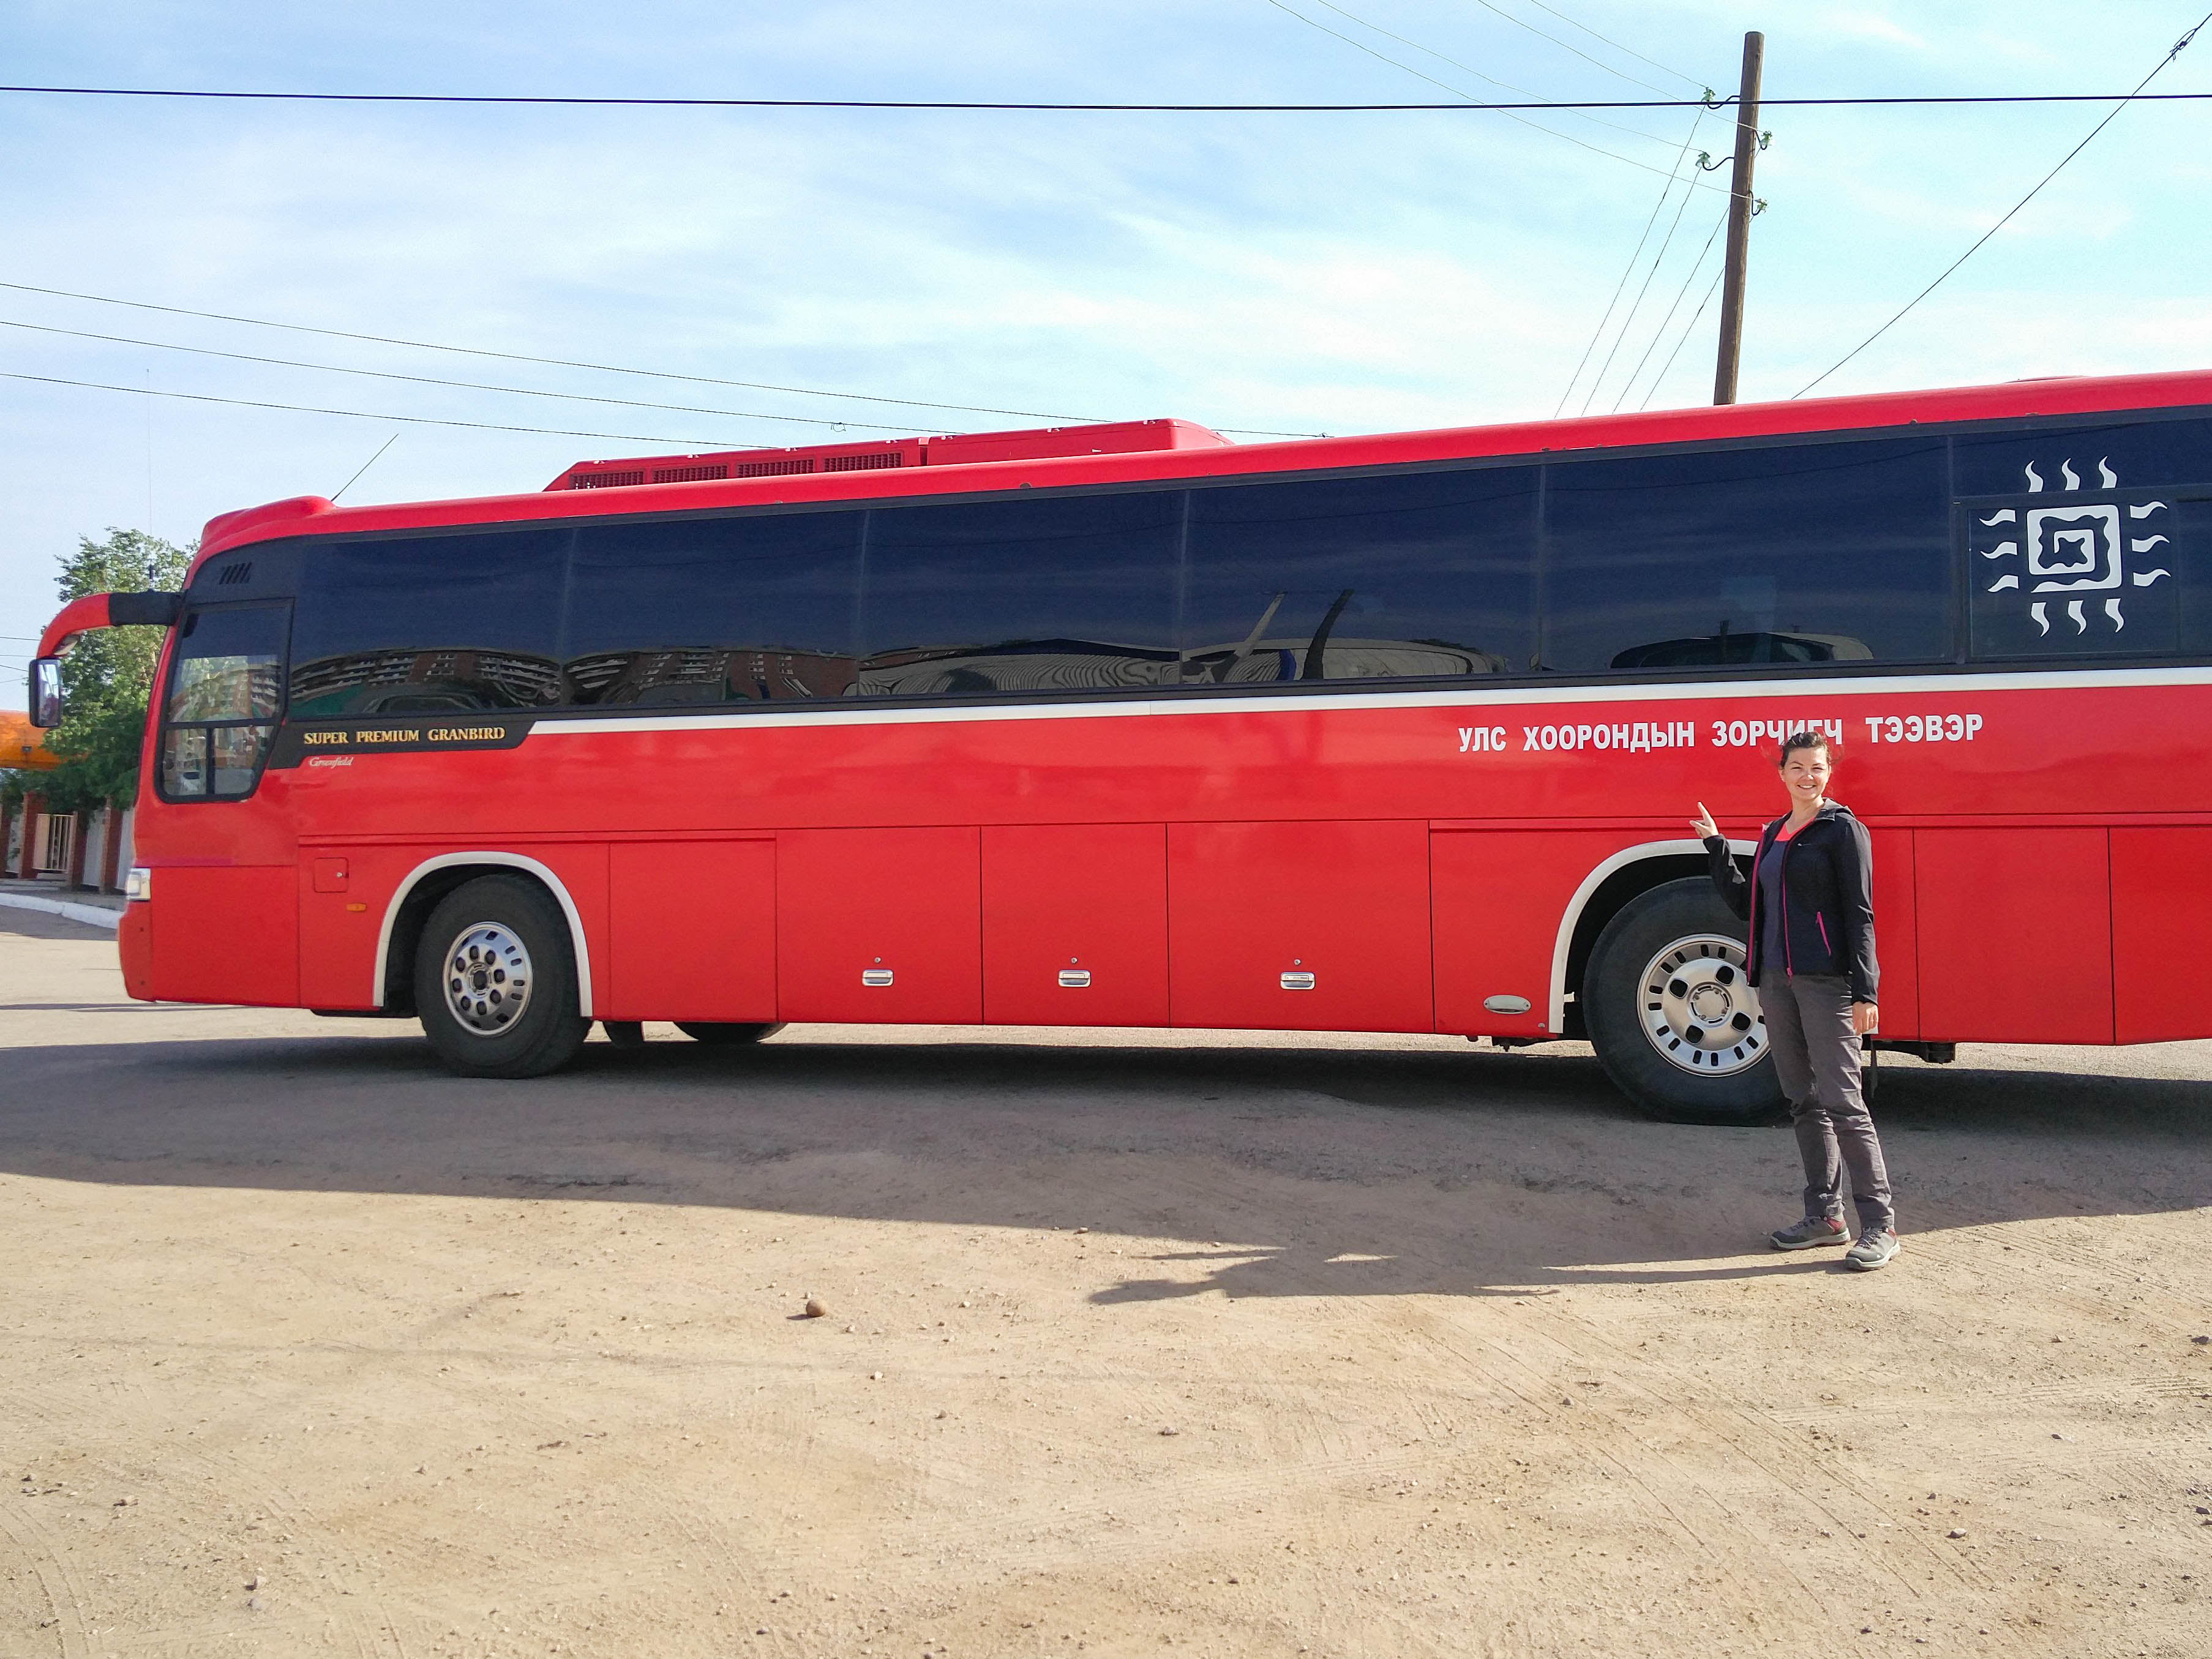 Trajet en bus d'Oulan Oudé à Oulan Bator en Mongolie @neweyes